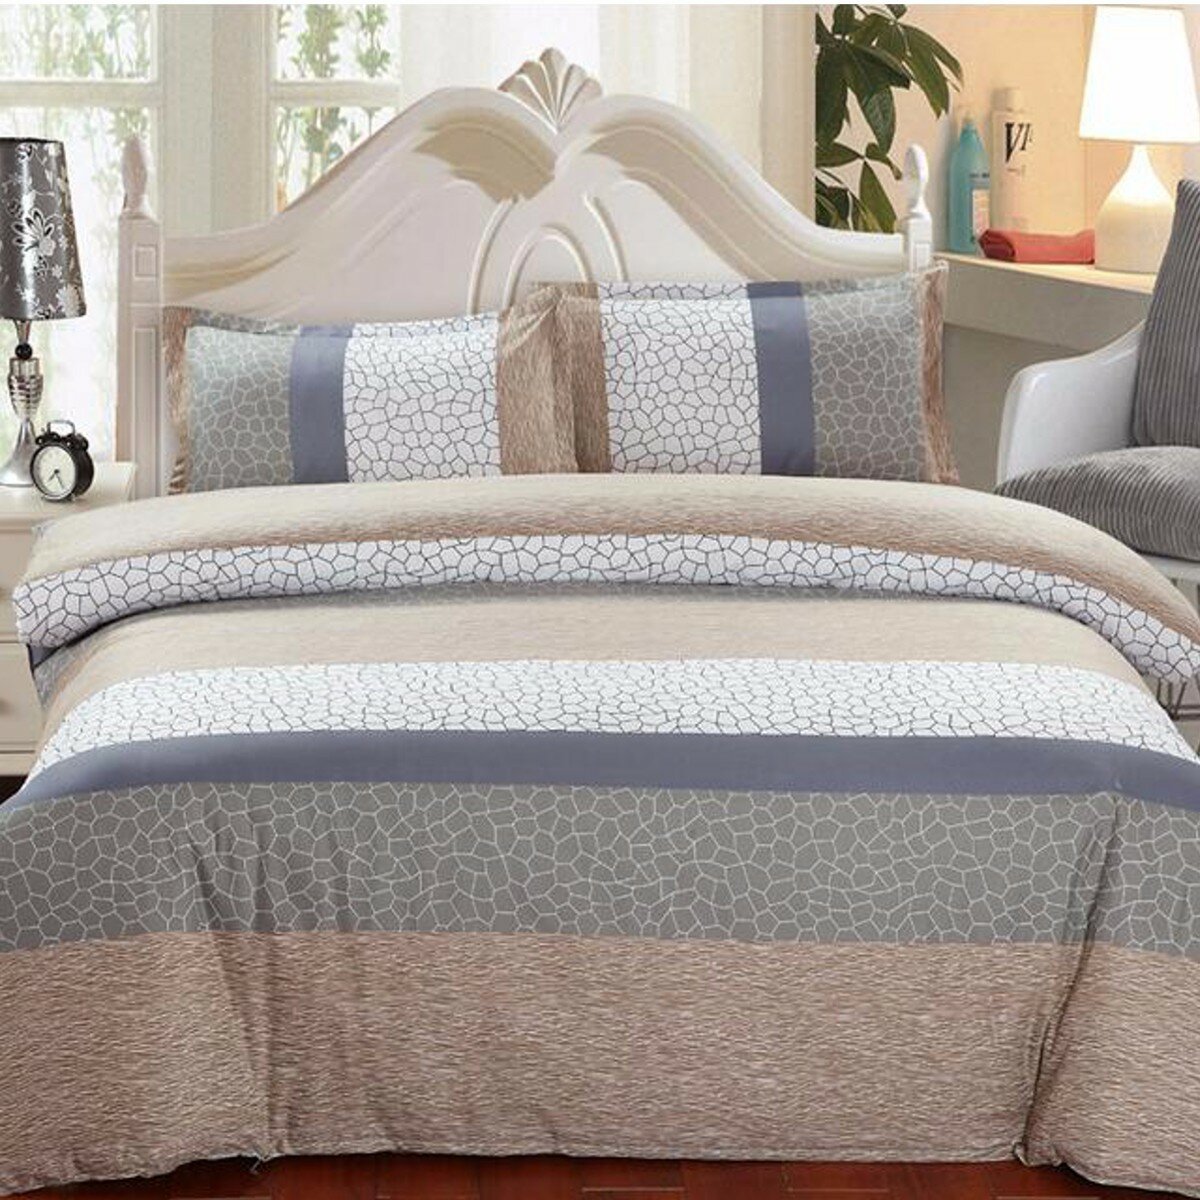 Hot-sale 4pcs Elegant Bedding Set Pillowcase Quilt Duvet Cover Flat Sheet Noble Twin Queen Size ...